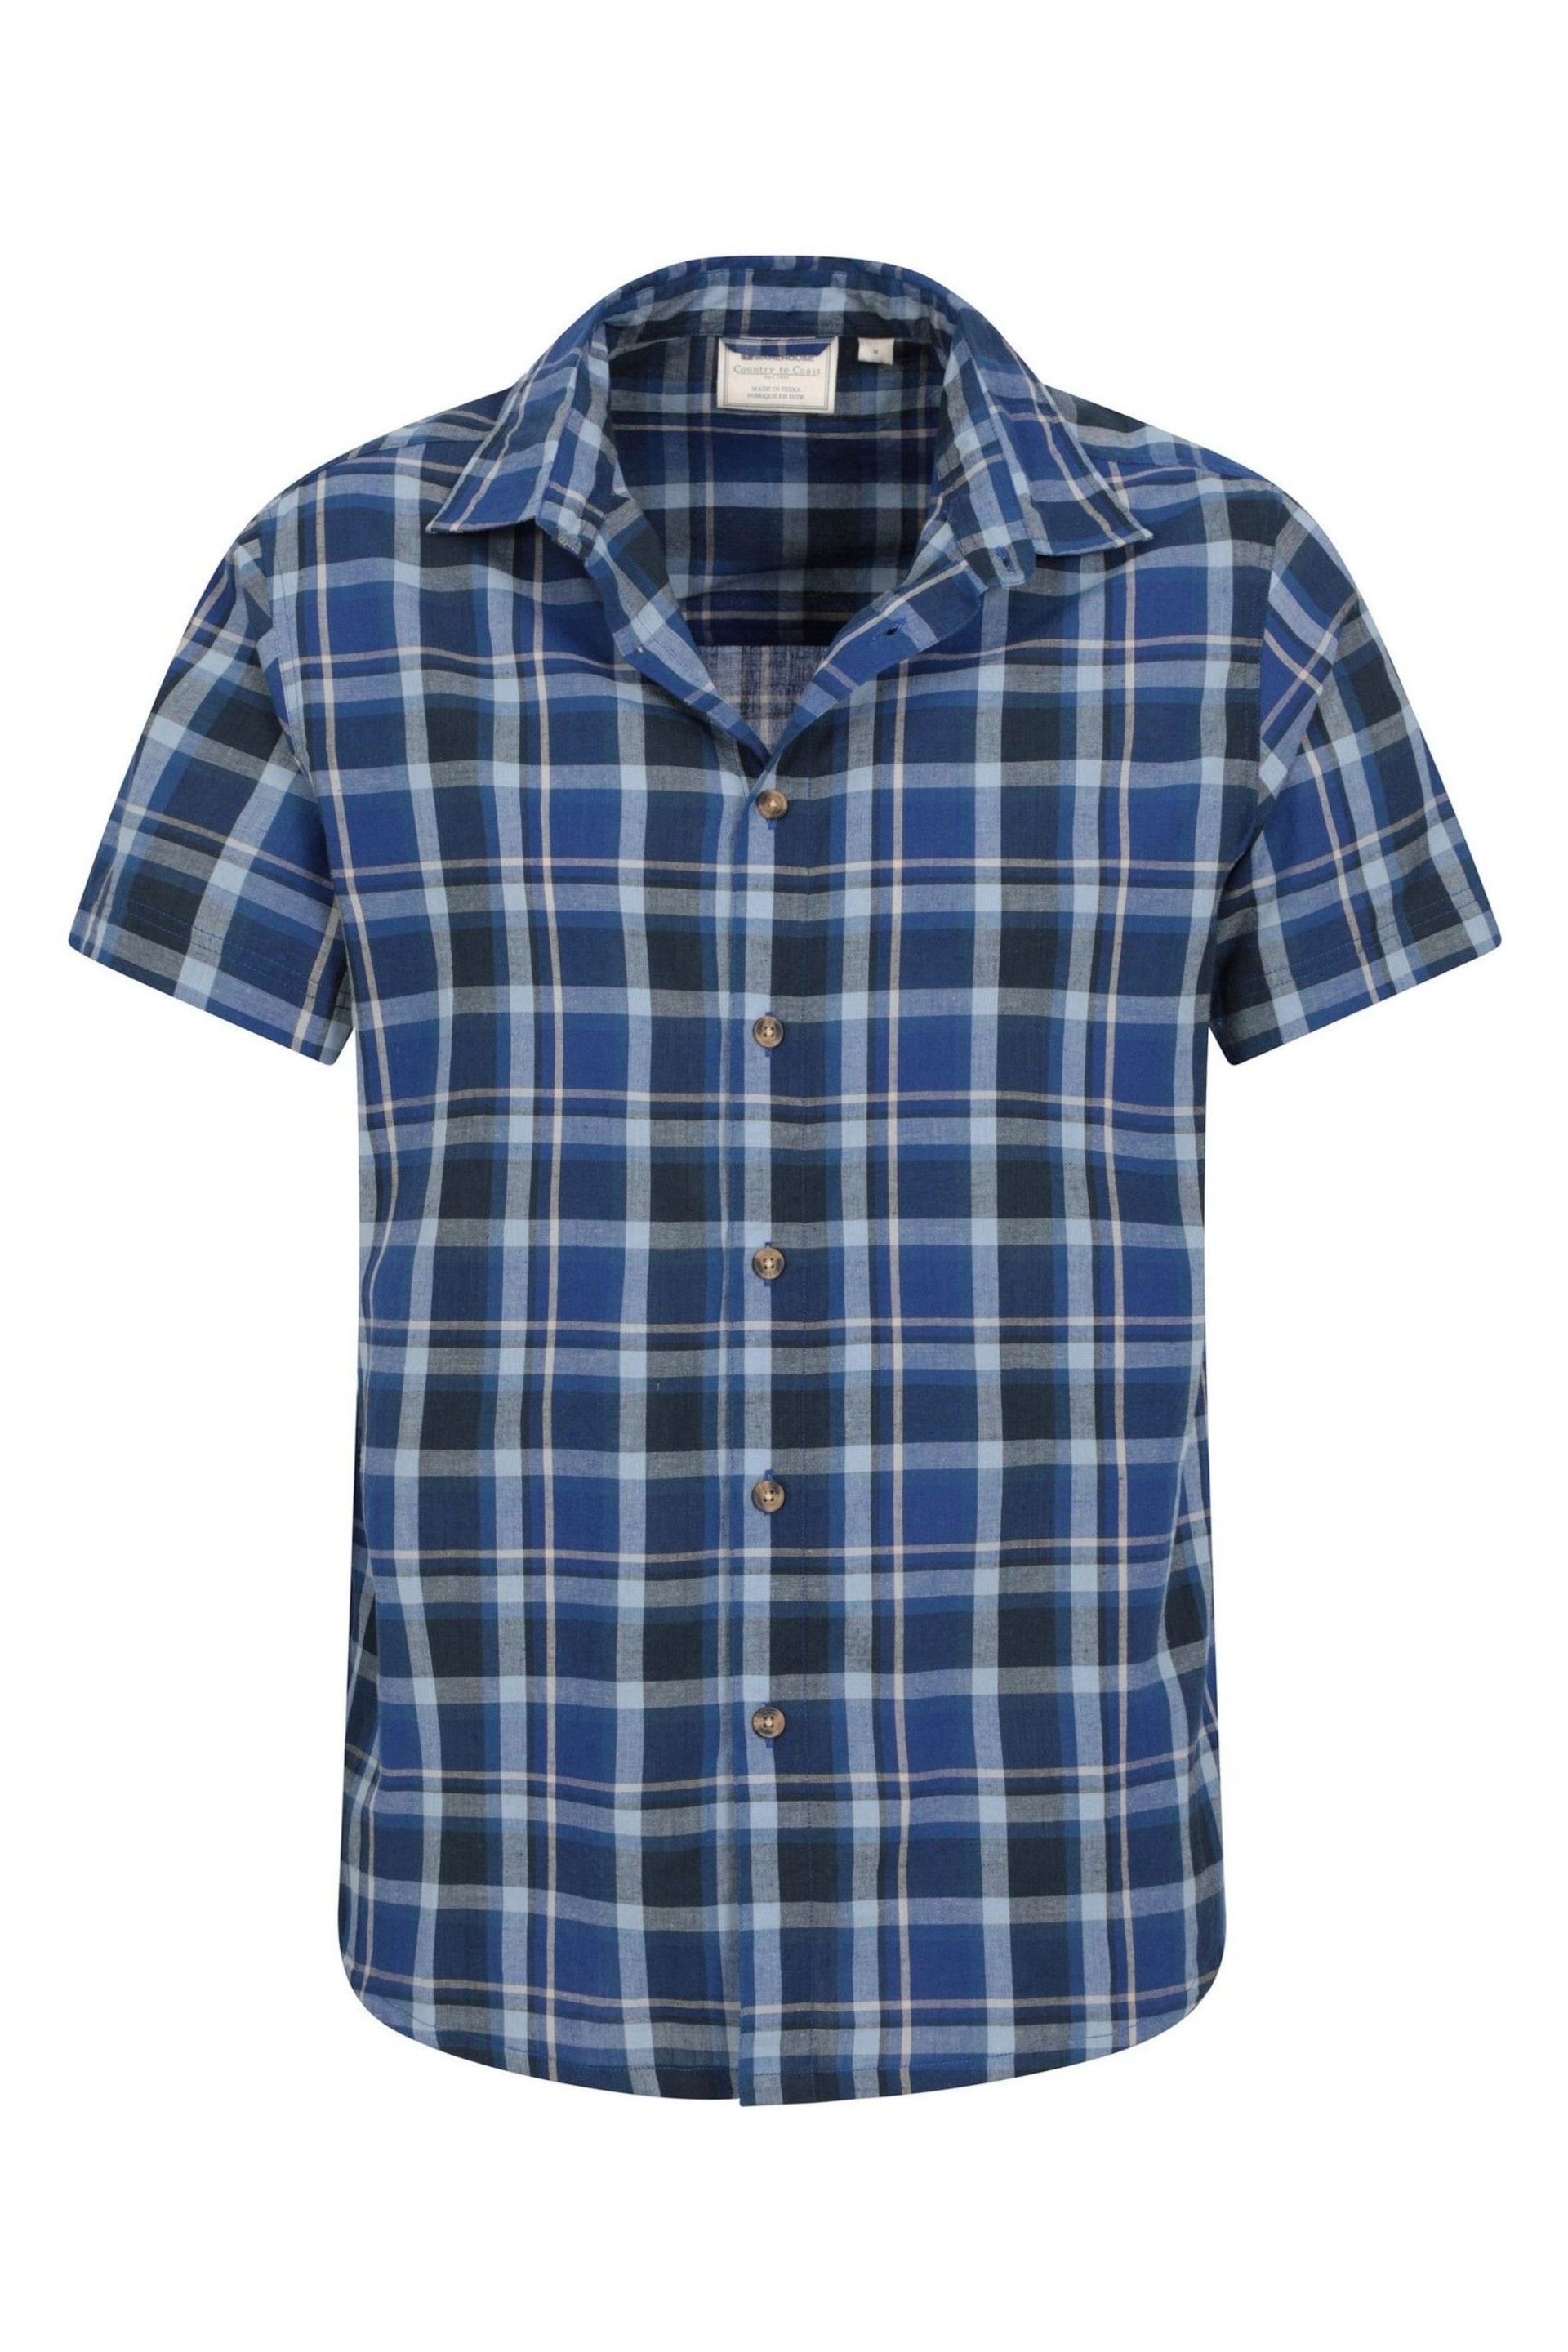 Mountain Warehouse Blue Weekender Mens Cotton Shirt - Image 5 of 5